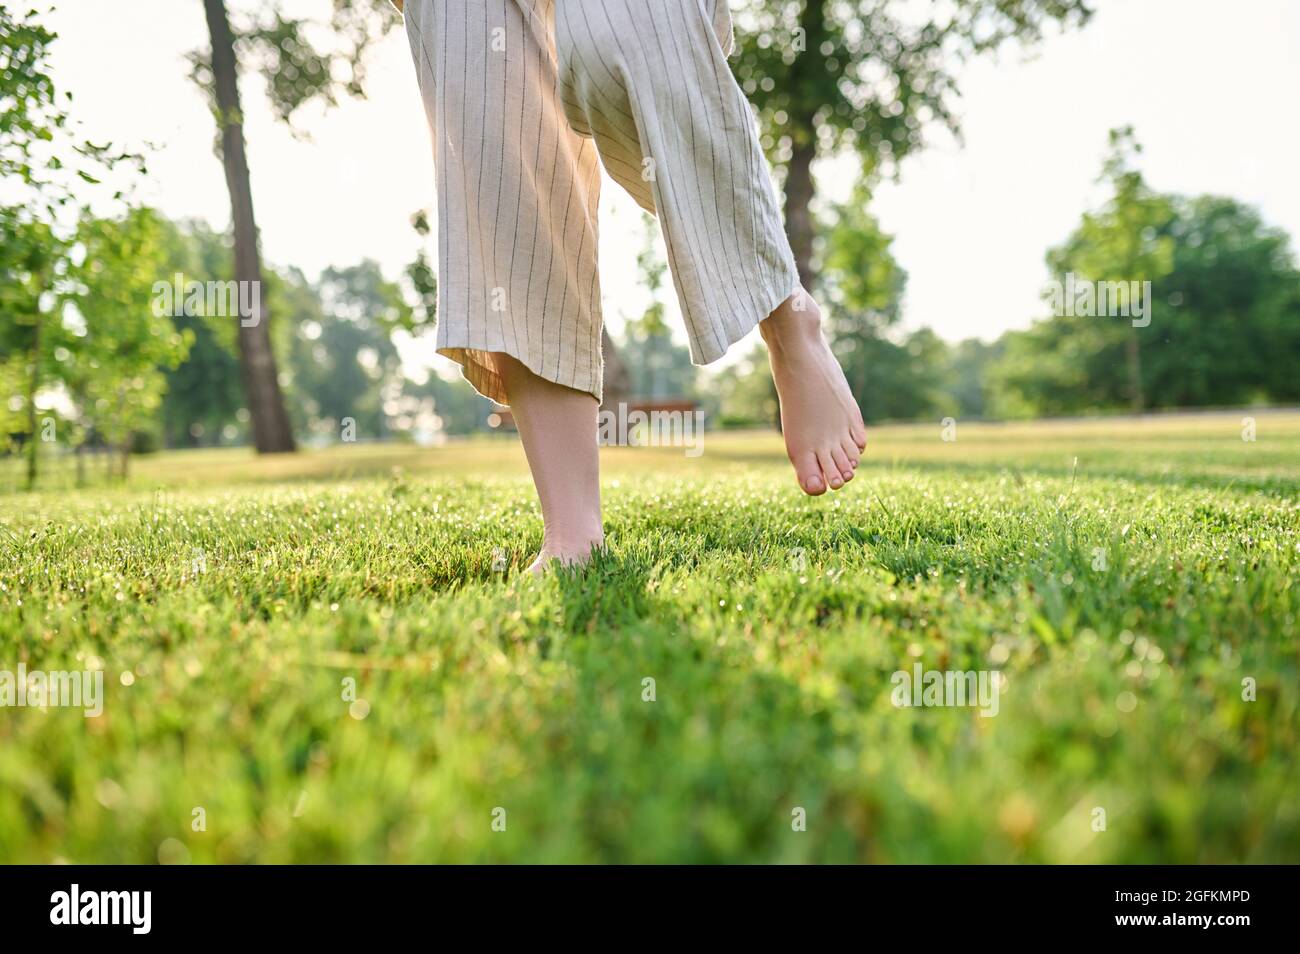 Womens legs joyfully moving on grass Stock Photo